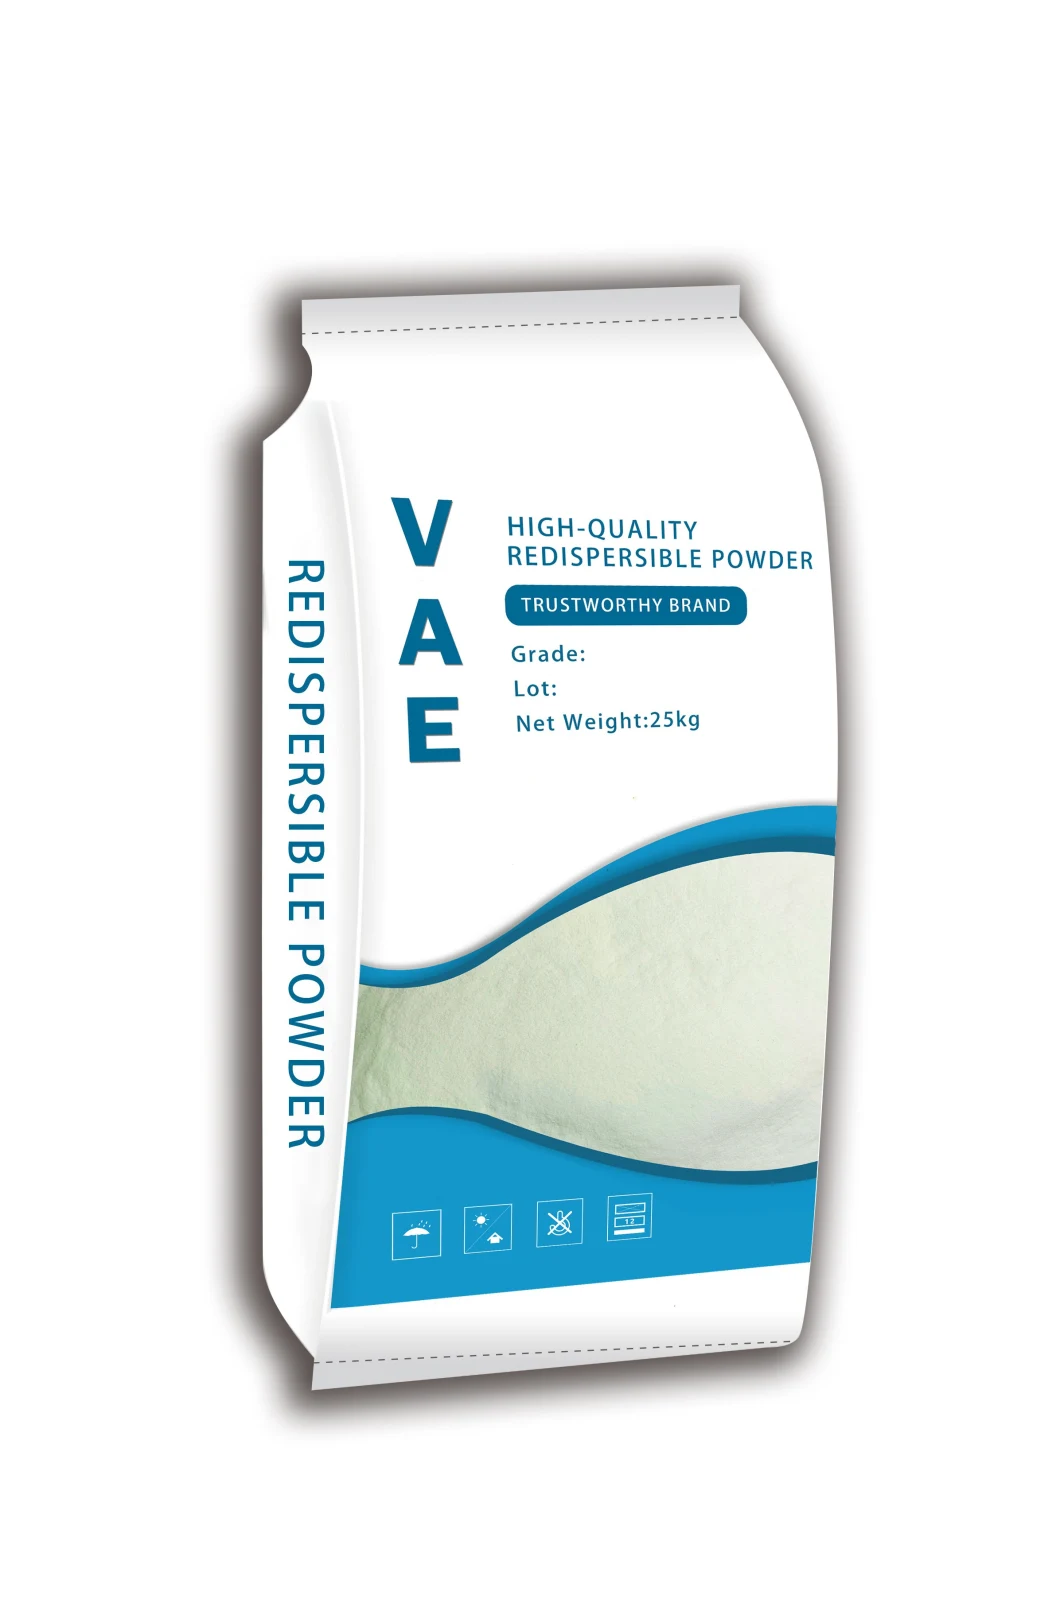 Vae Professional Factory Supply Redispersible Polymer Powder Vae Rdp Polymer Powder for Mortar